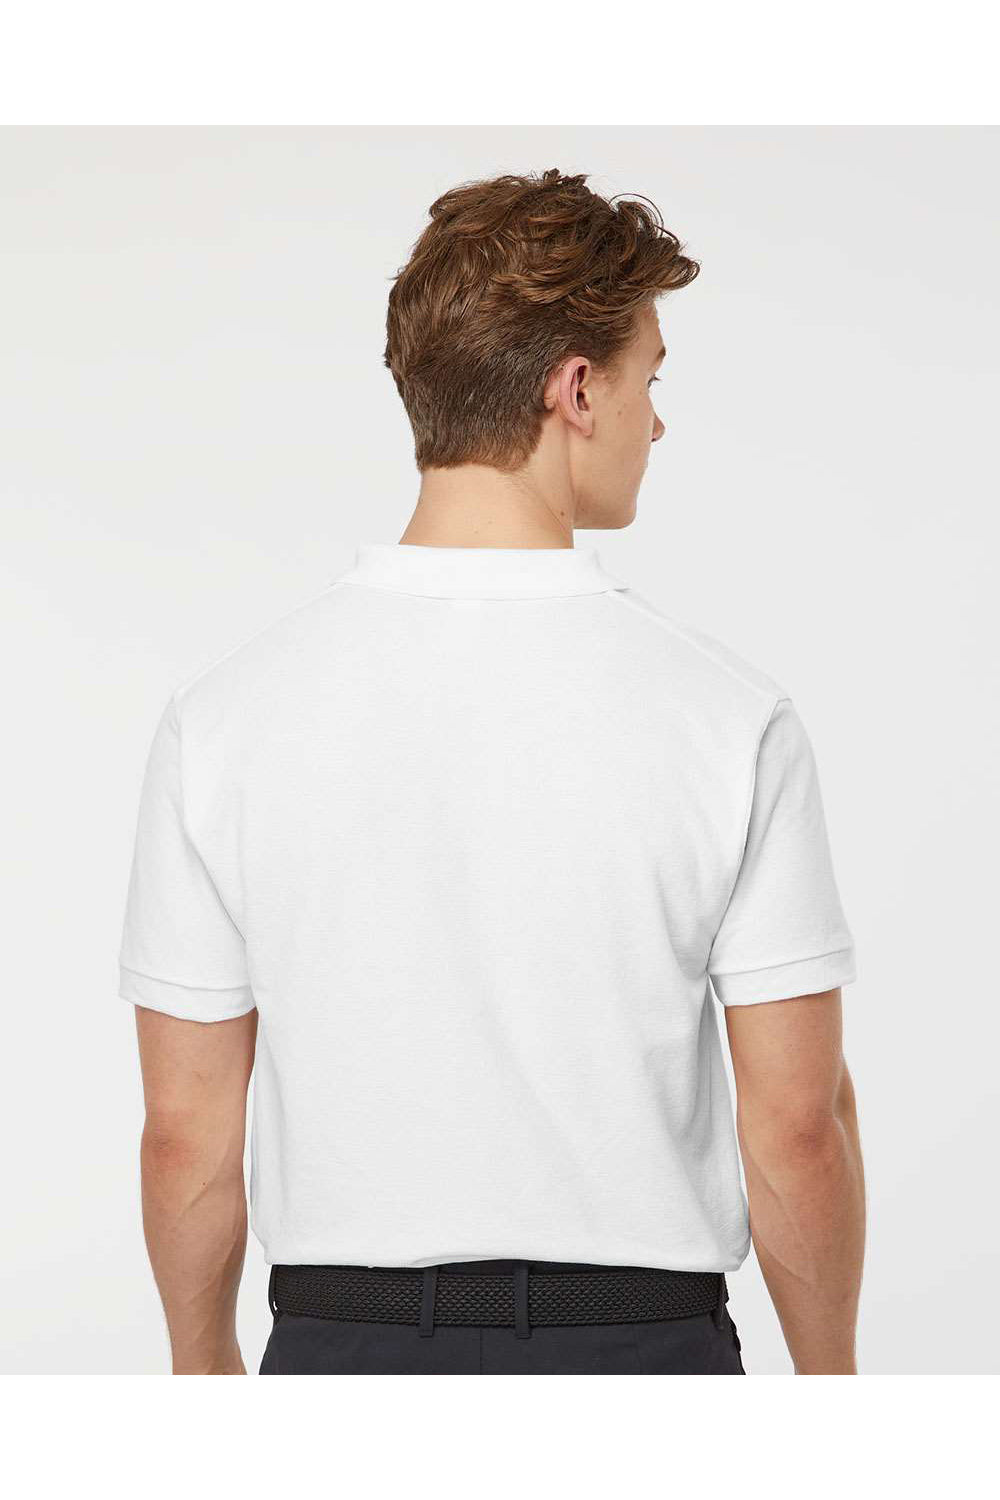 Tultex 400 Mens Sport Shirt Sleeve Polo Shirt White Model Back